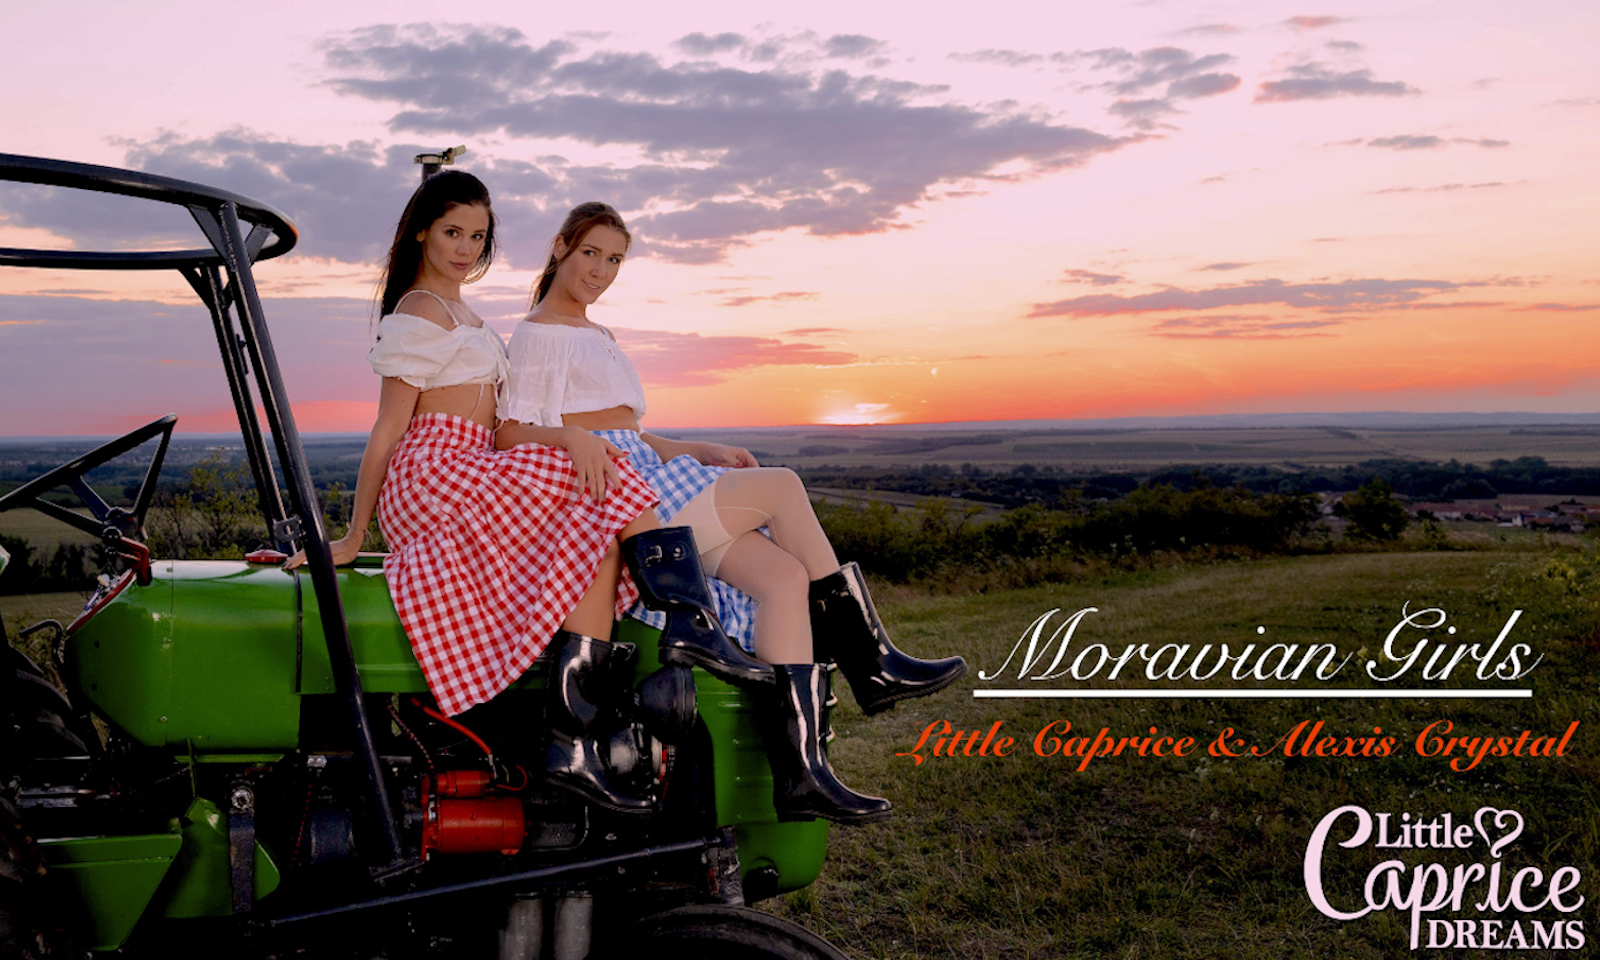 Little Caprice & Alexis Crystal Perform in Moravian Wine Fields